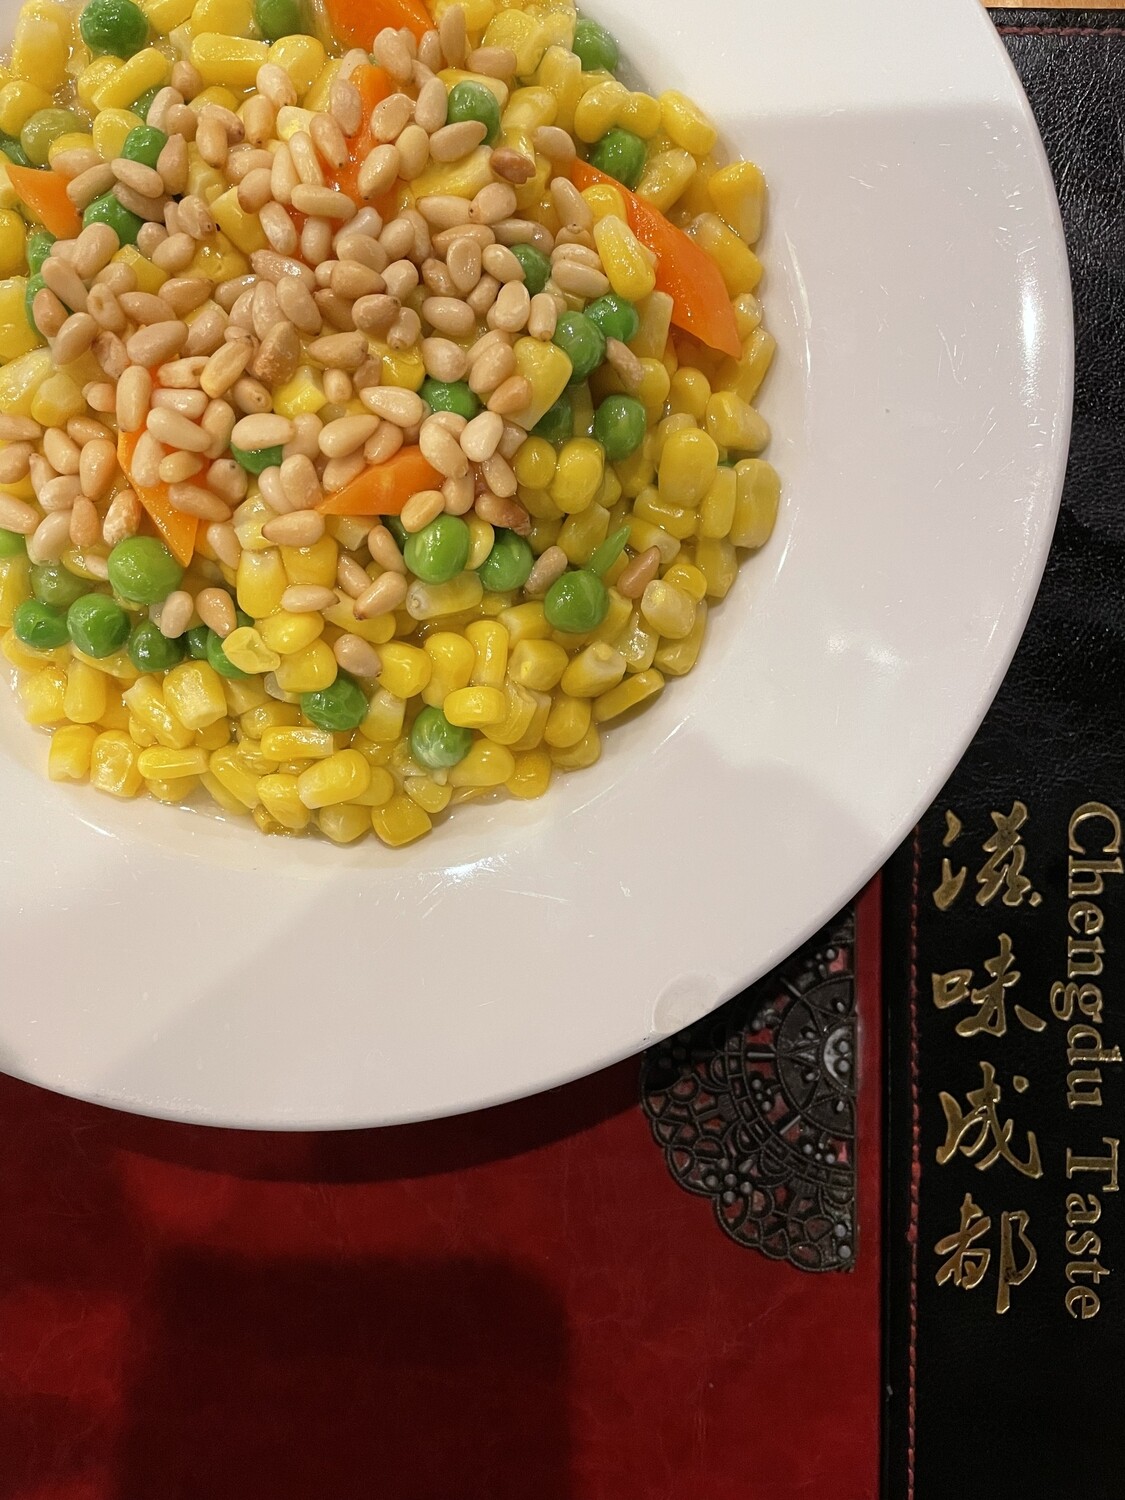 ZWCD【滋味成都】松仁玉米 Corn with Pine Nuts（晚餐不配饭）